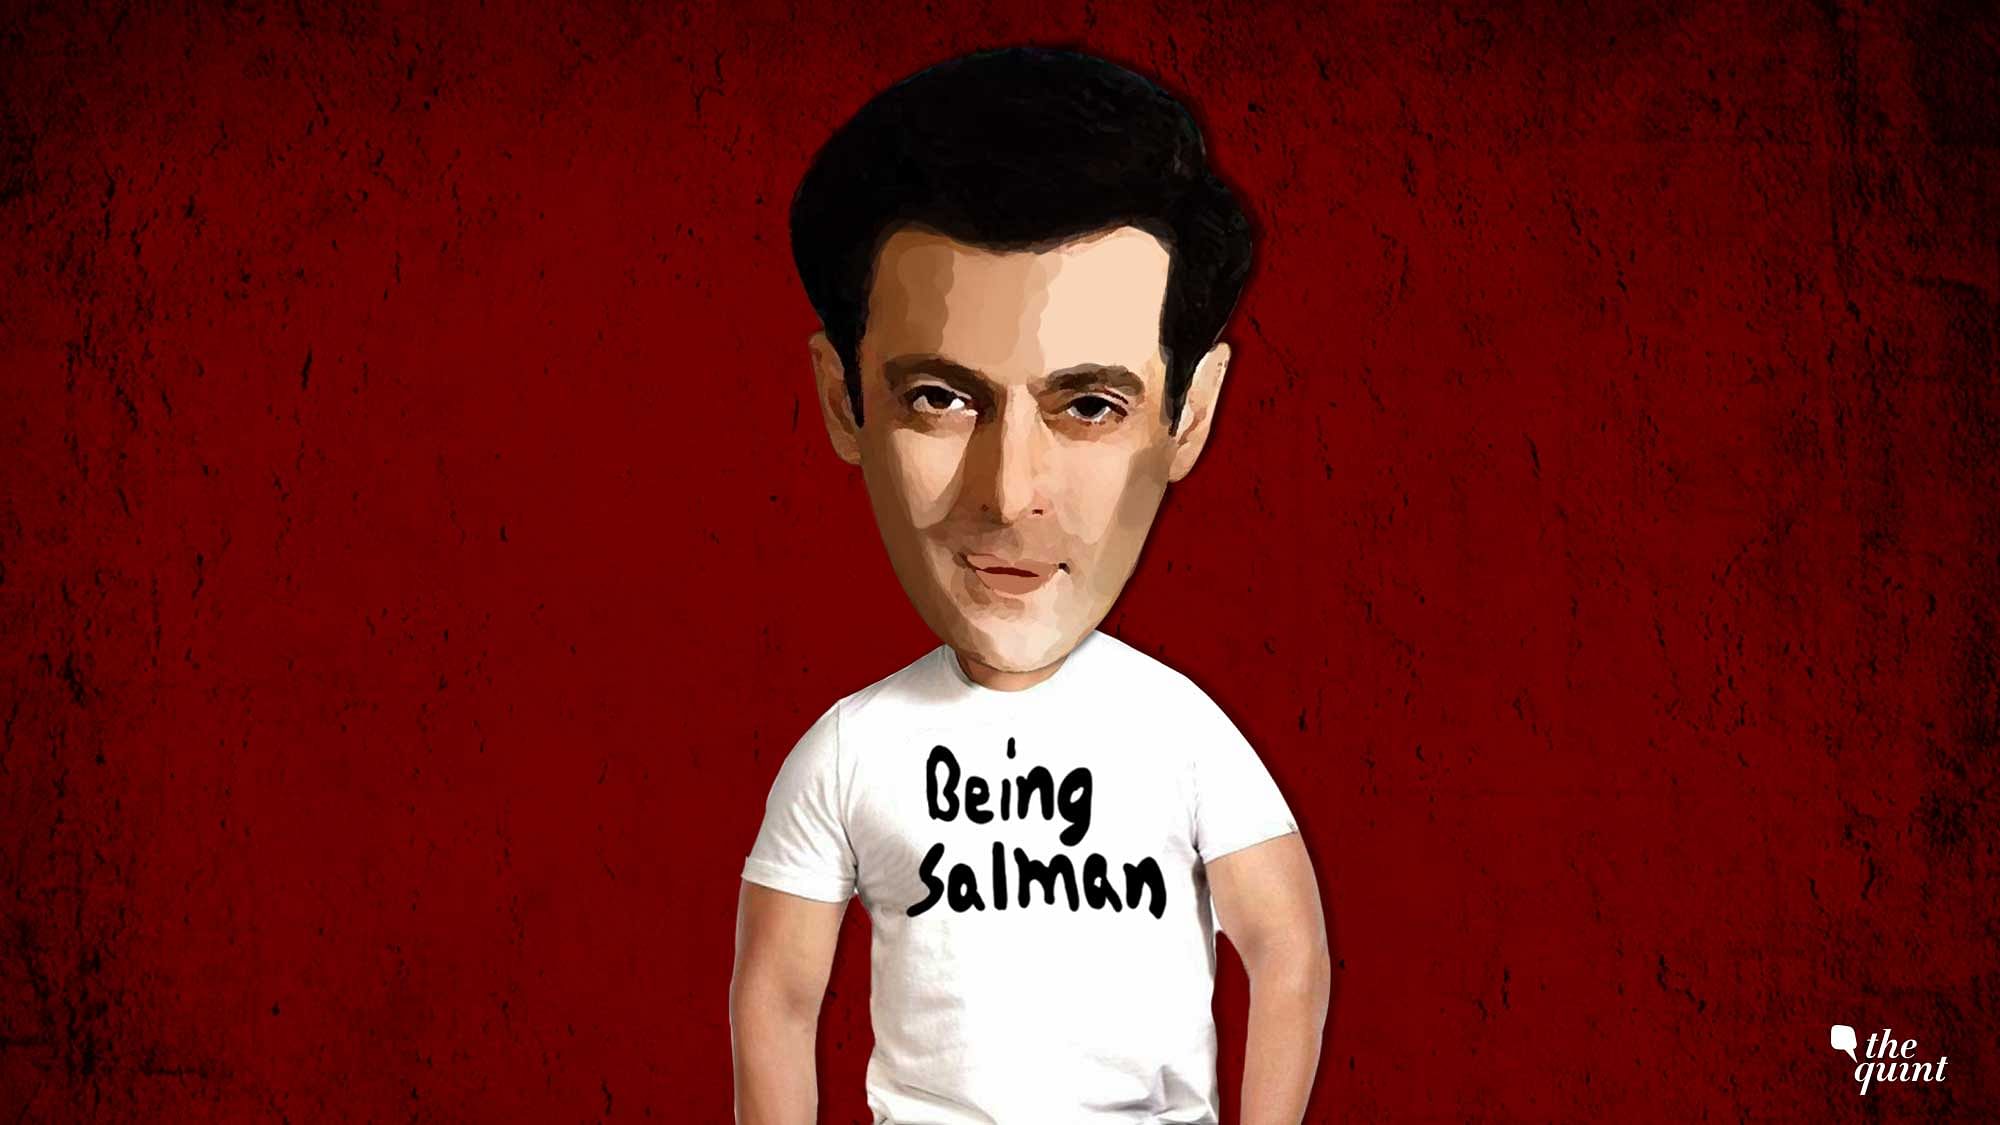 Salman Khan Reacts To Bollywood VS South Debate: 